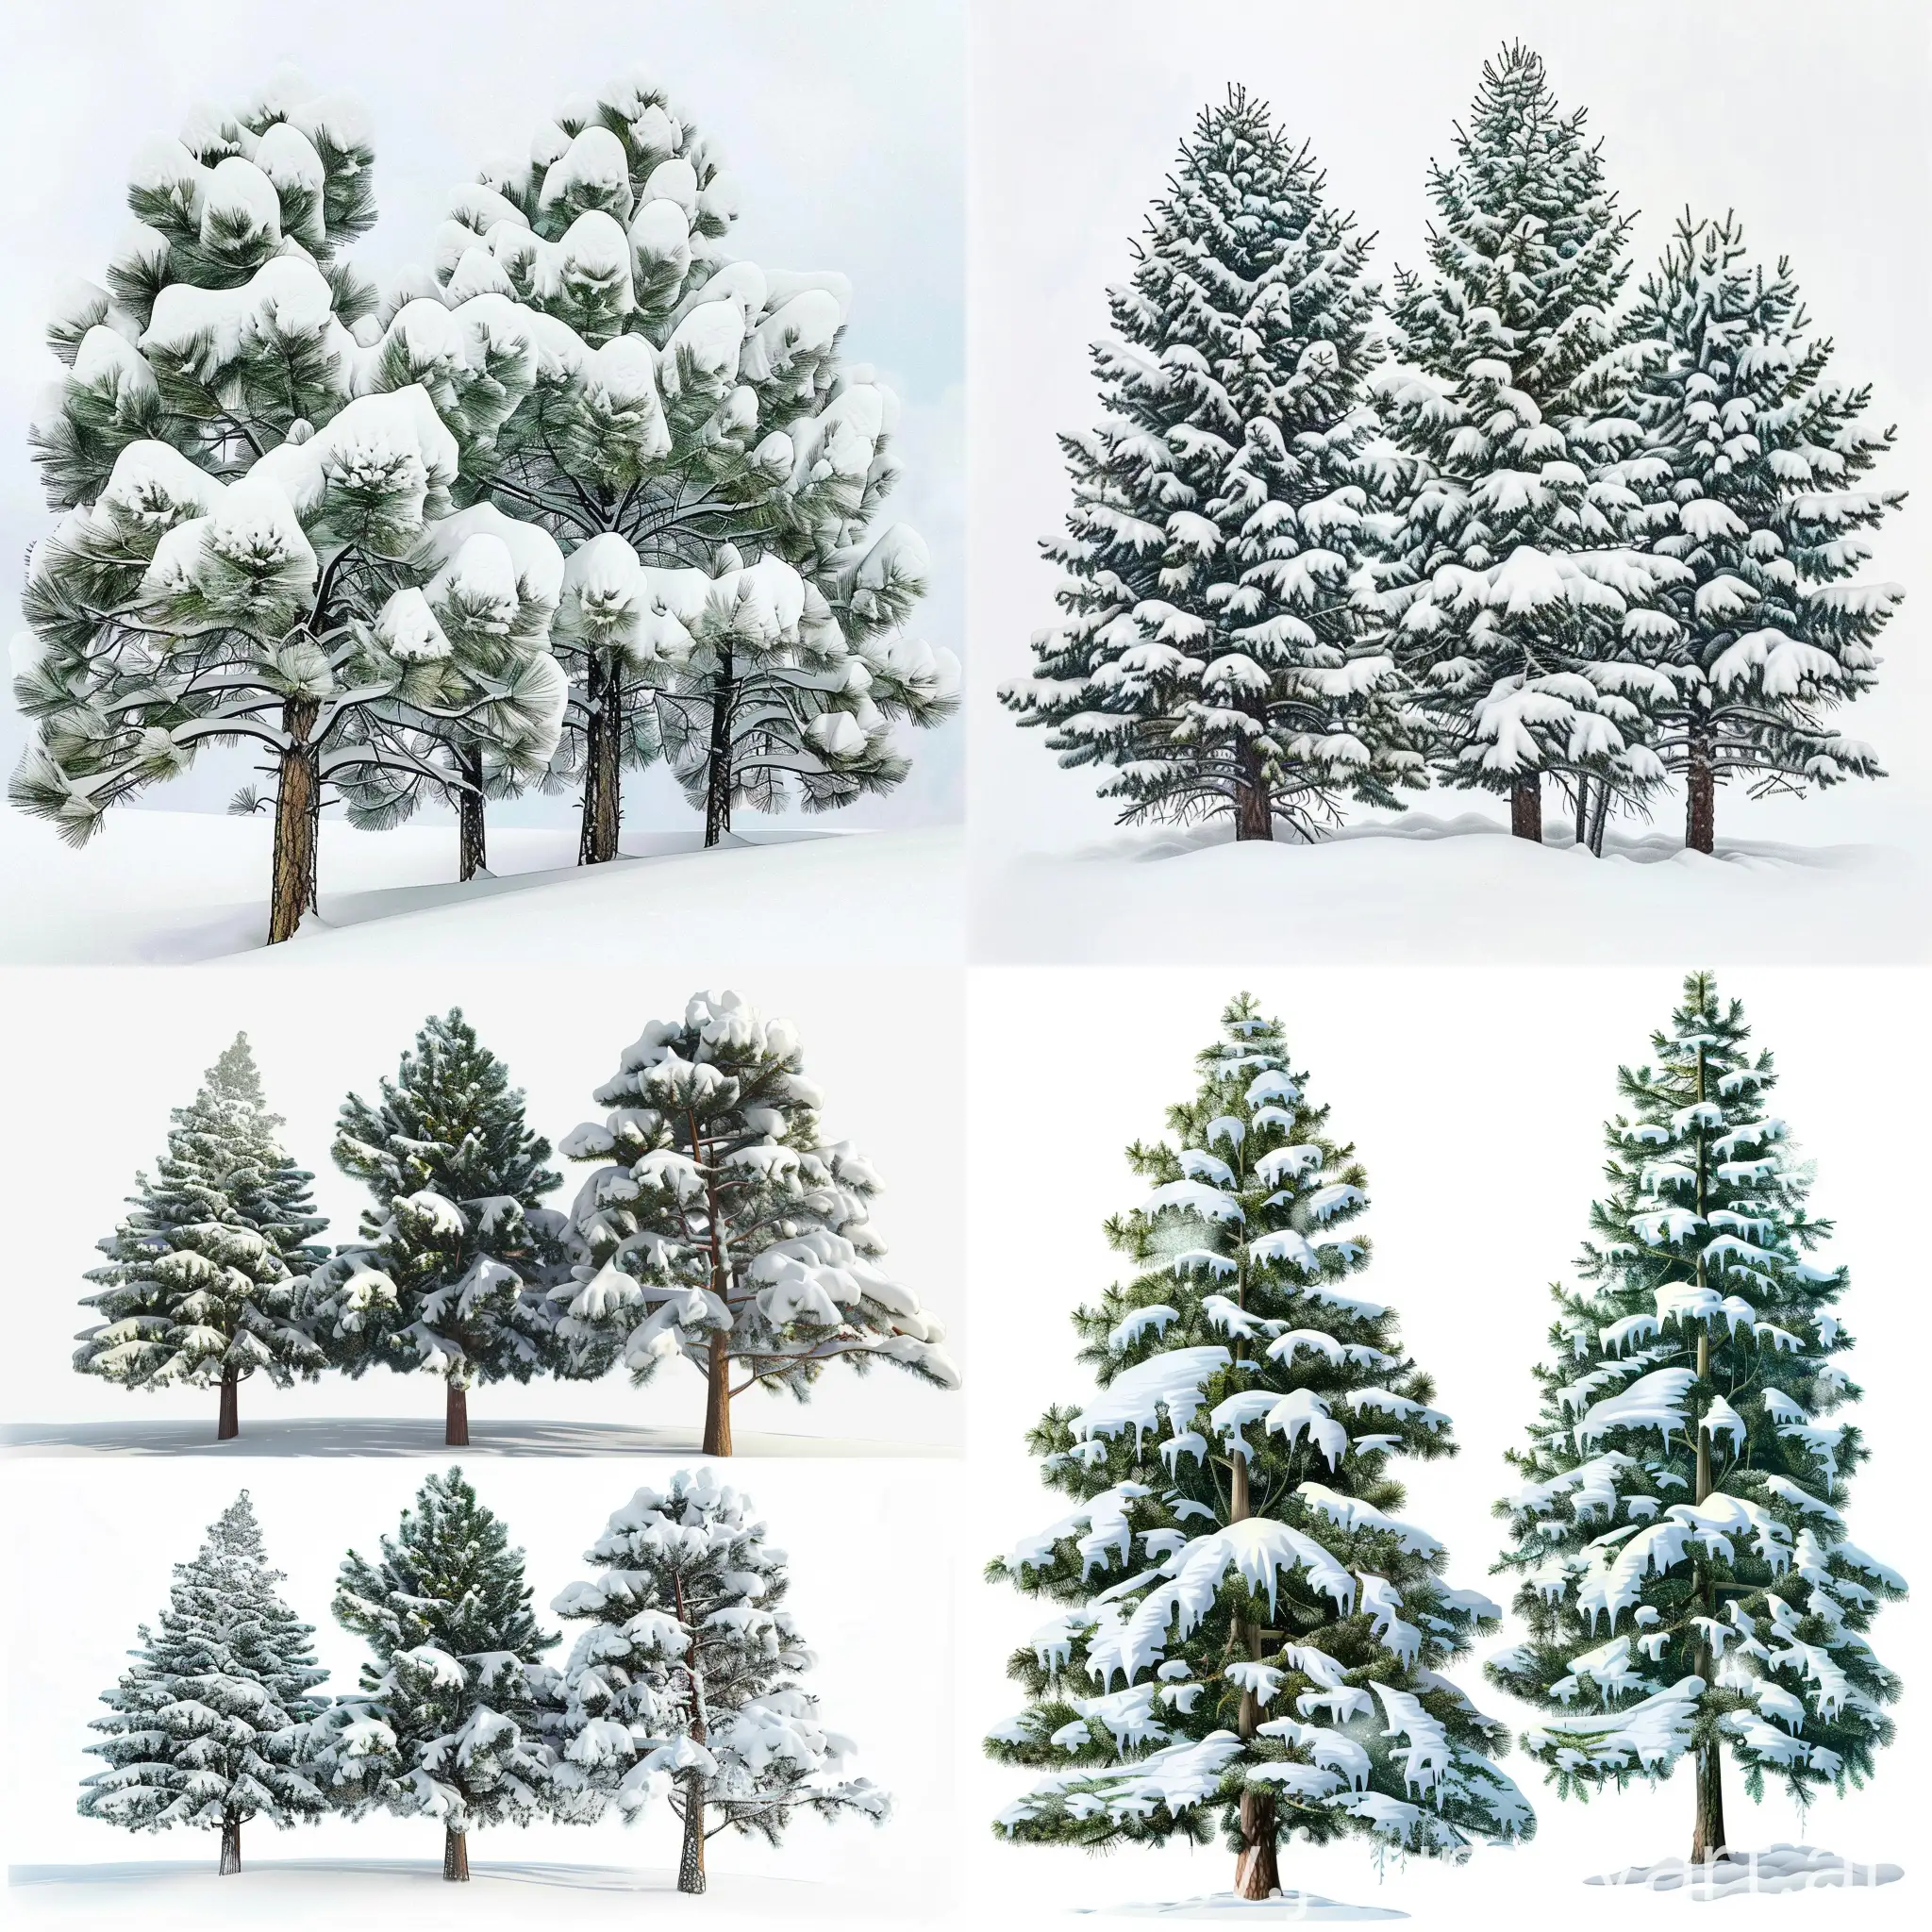 SnowLaden-Pine-Trees-Winter-Forest-Scene